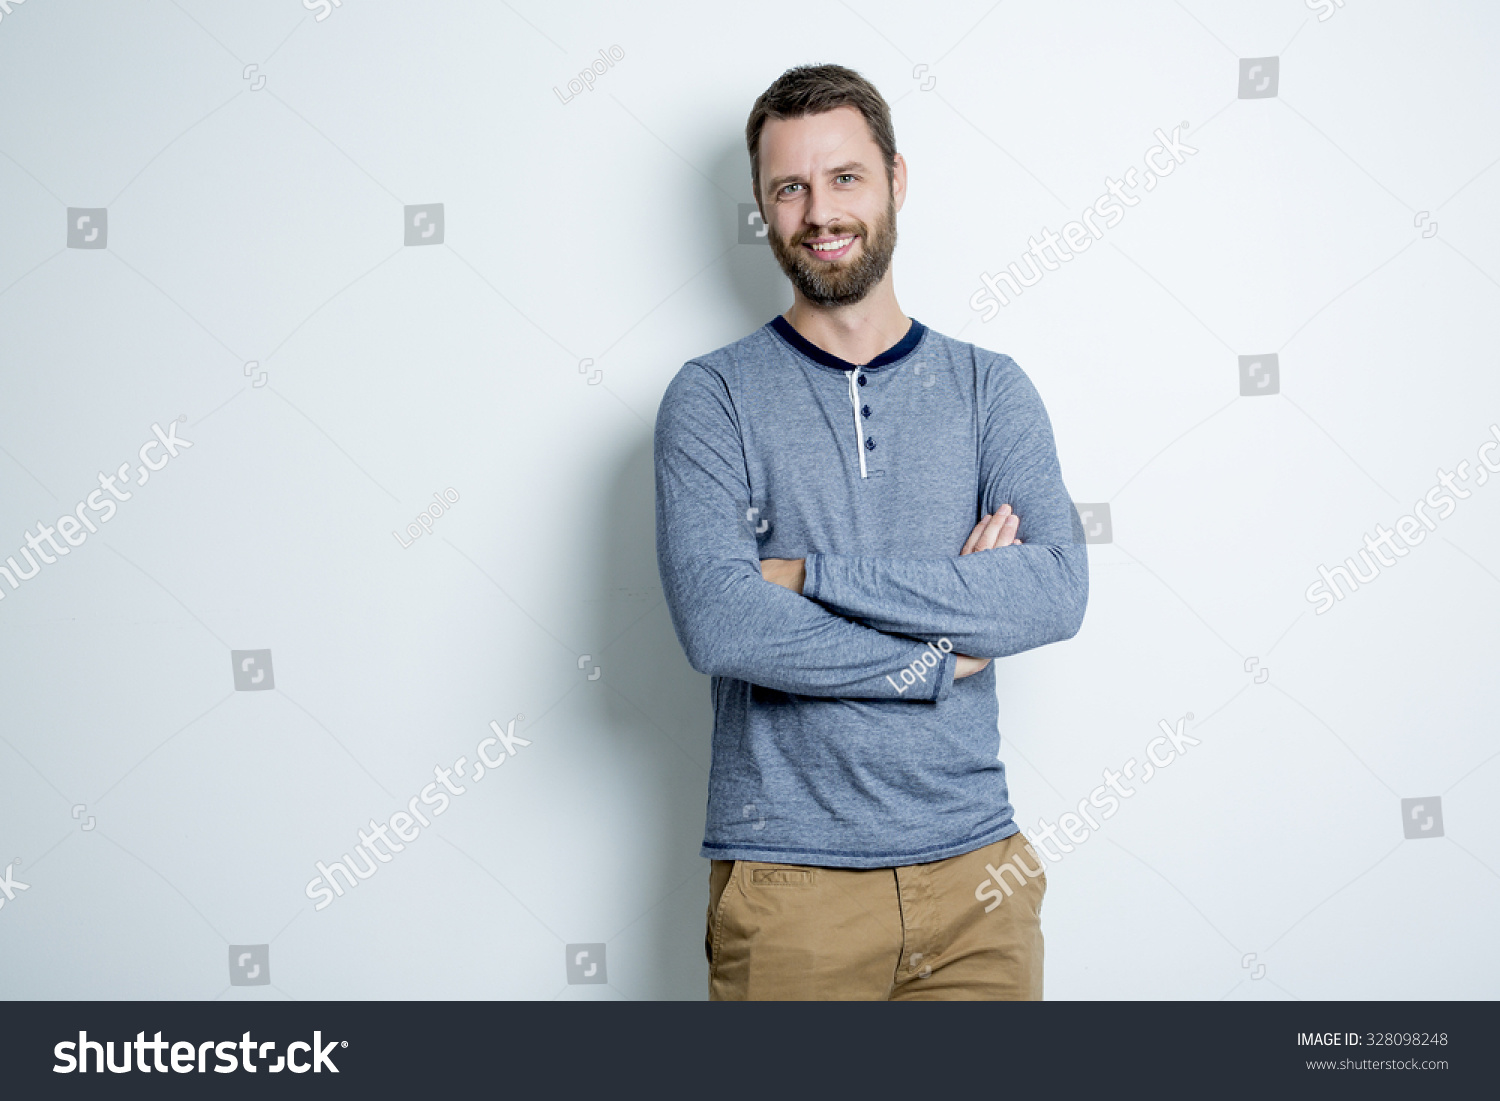 A Portrait of a men in studio gray background #328098248